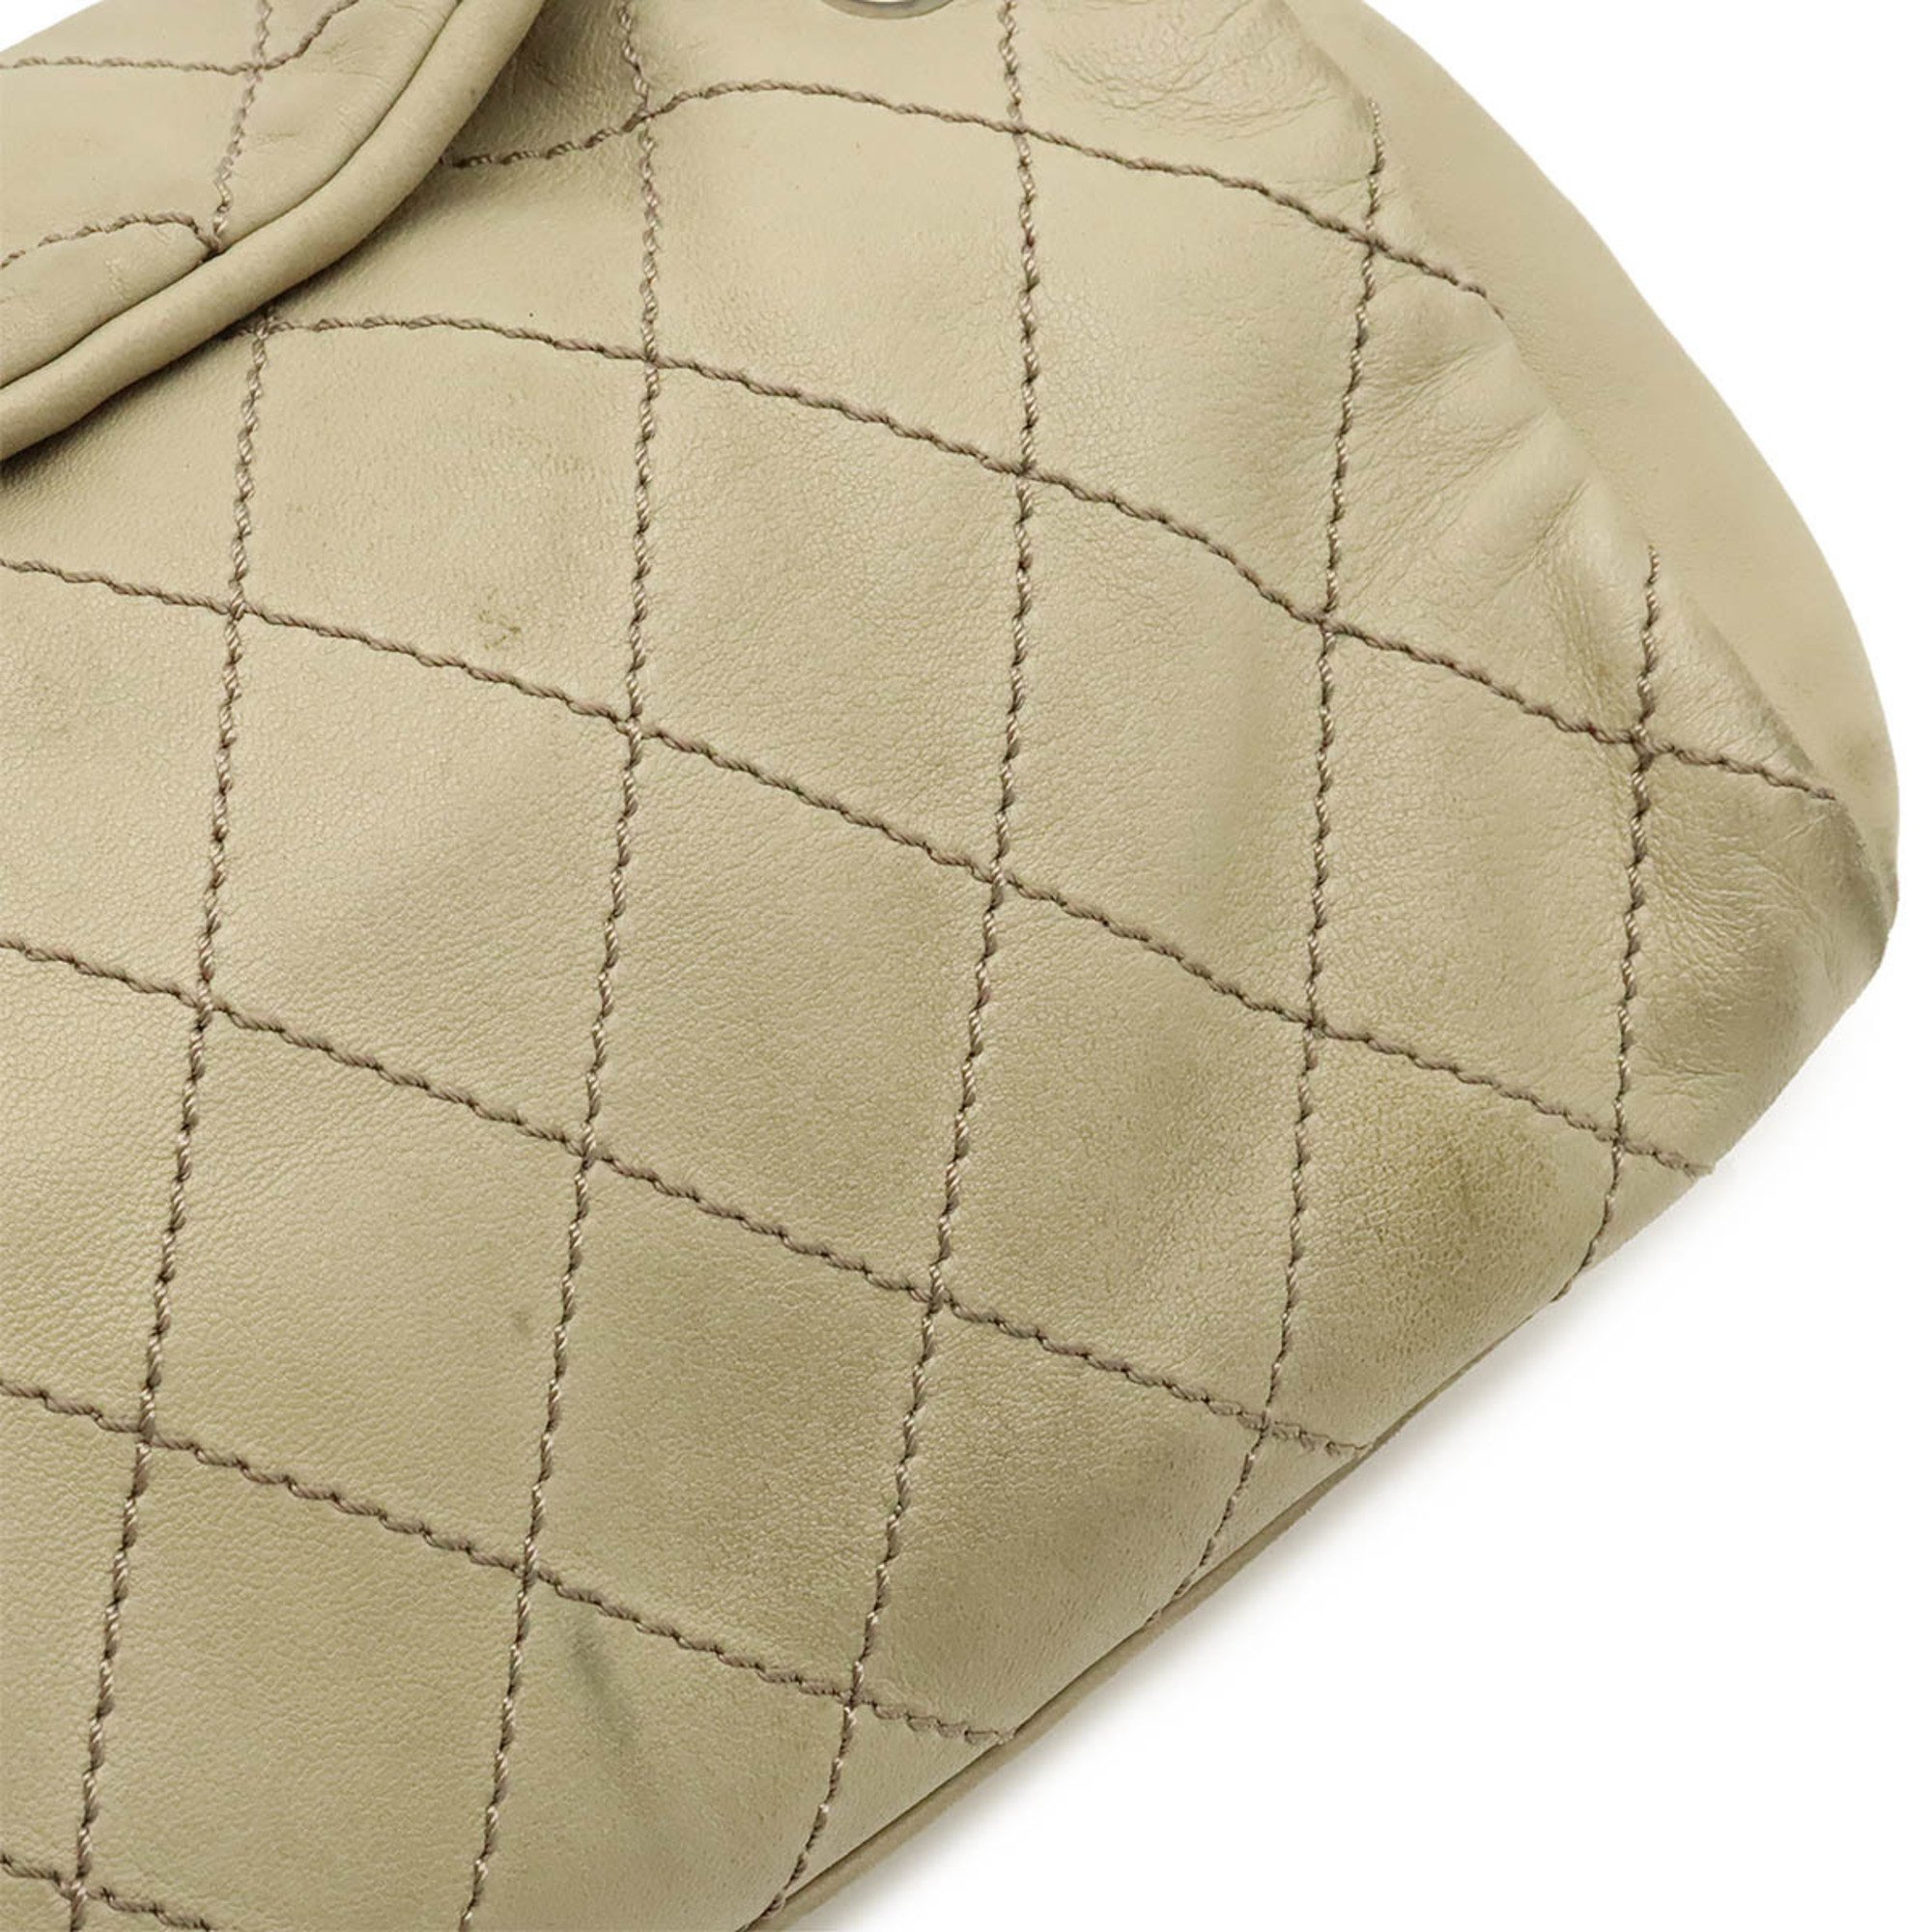 CHANEL Coco Mark Matelasse Chain Shoulder Bag Leather Beige